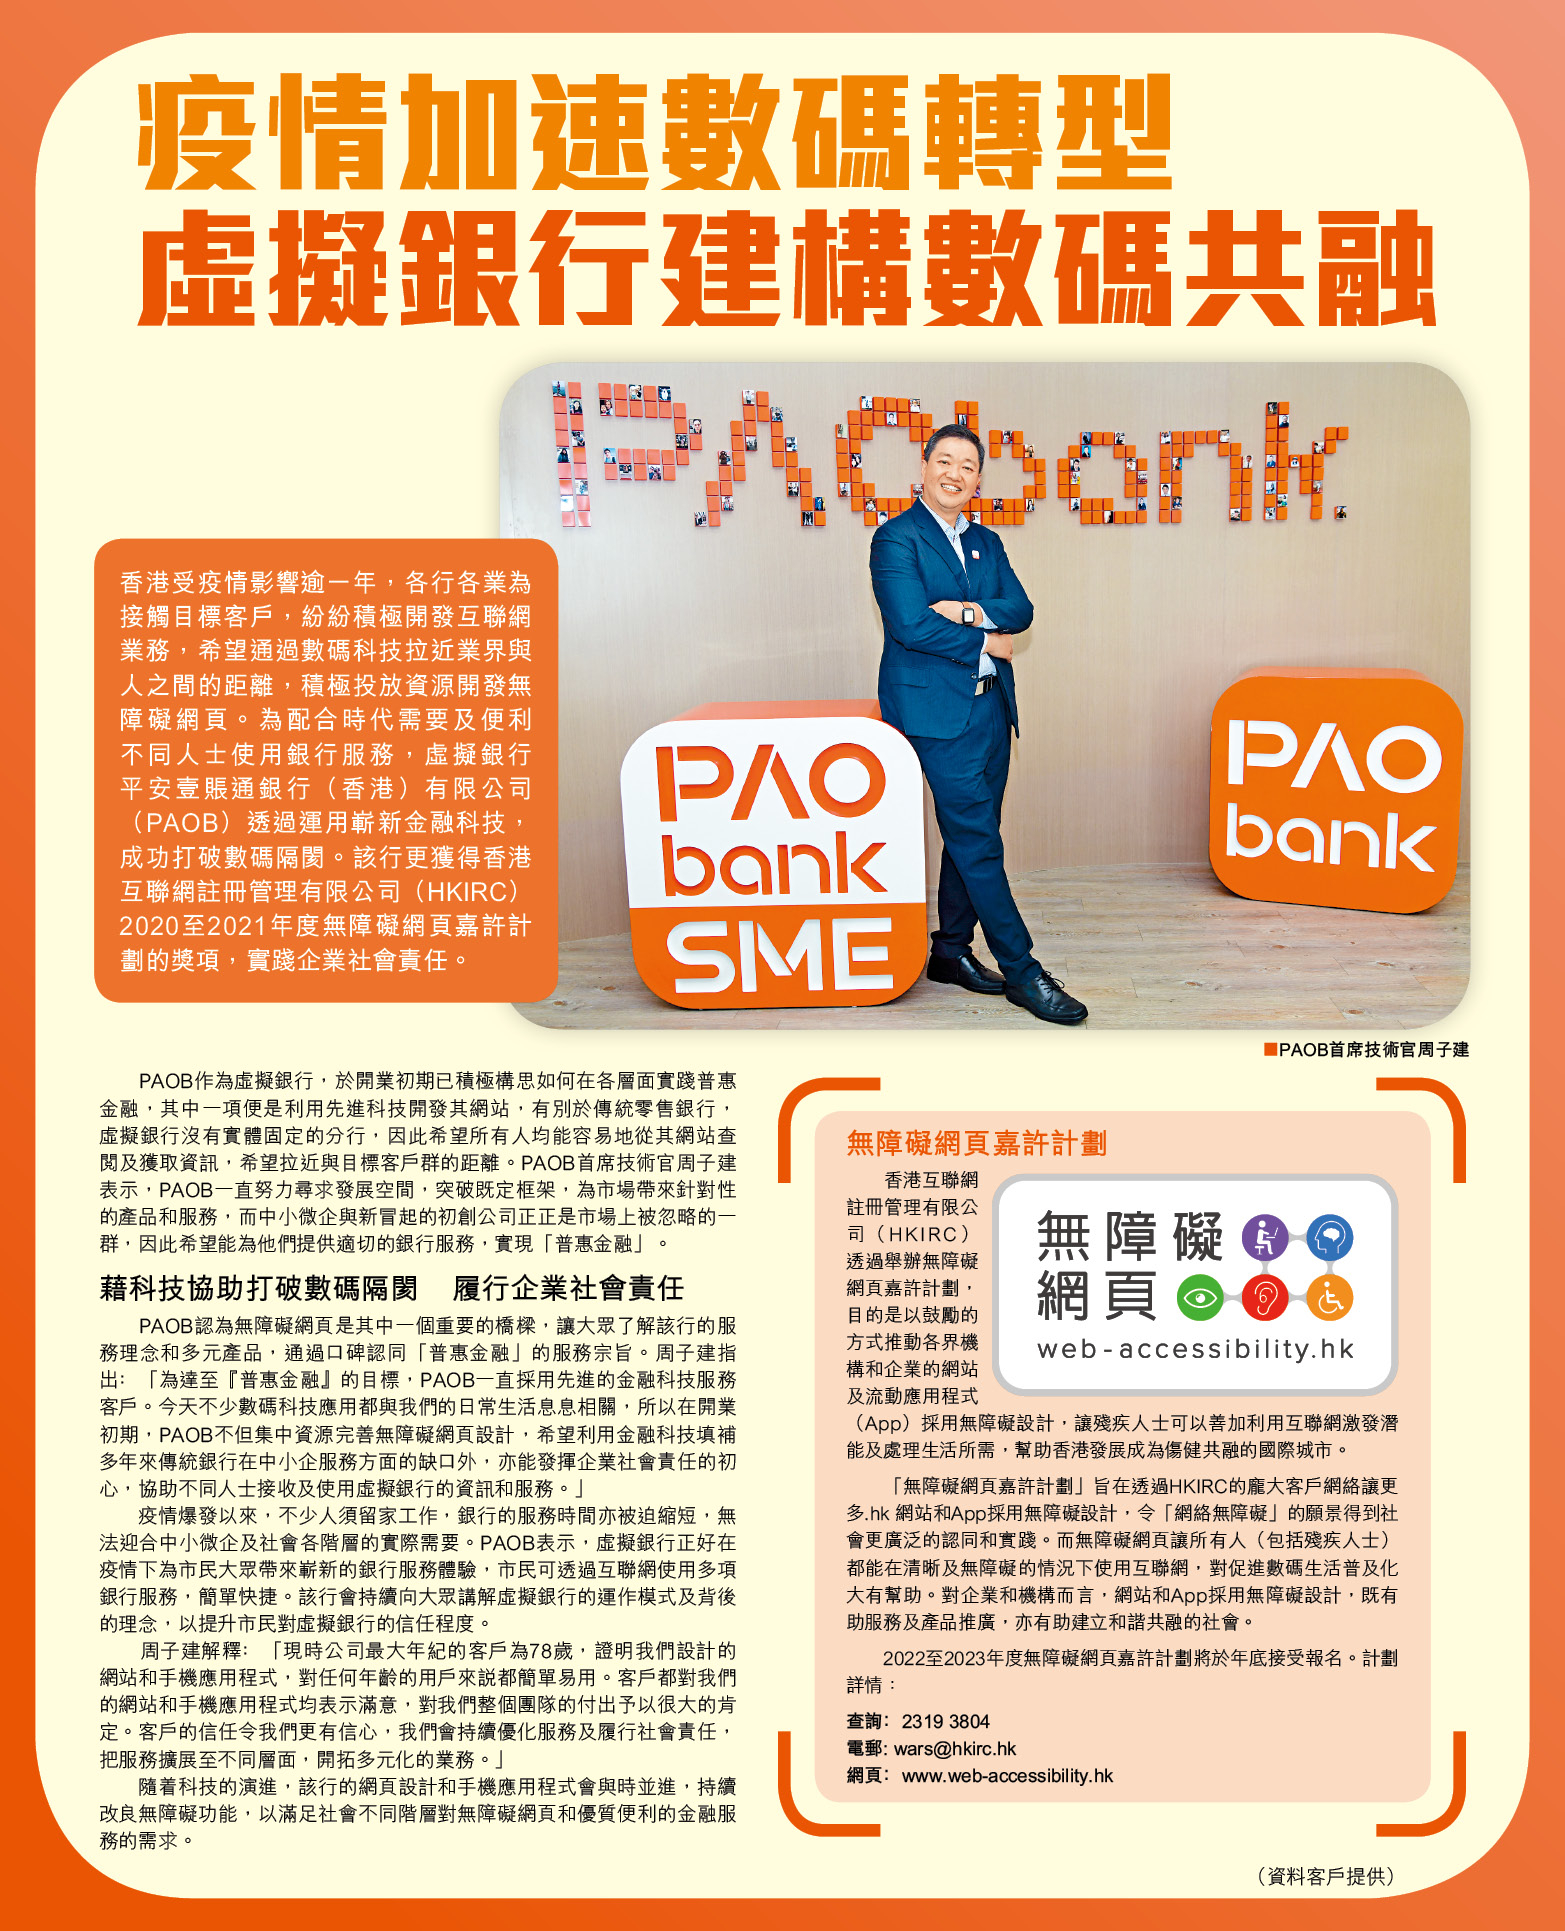 (Chinese Only) 虛擬銀行建無障礙網頁 加快數碼轉型社會共融